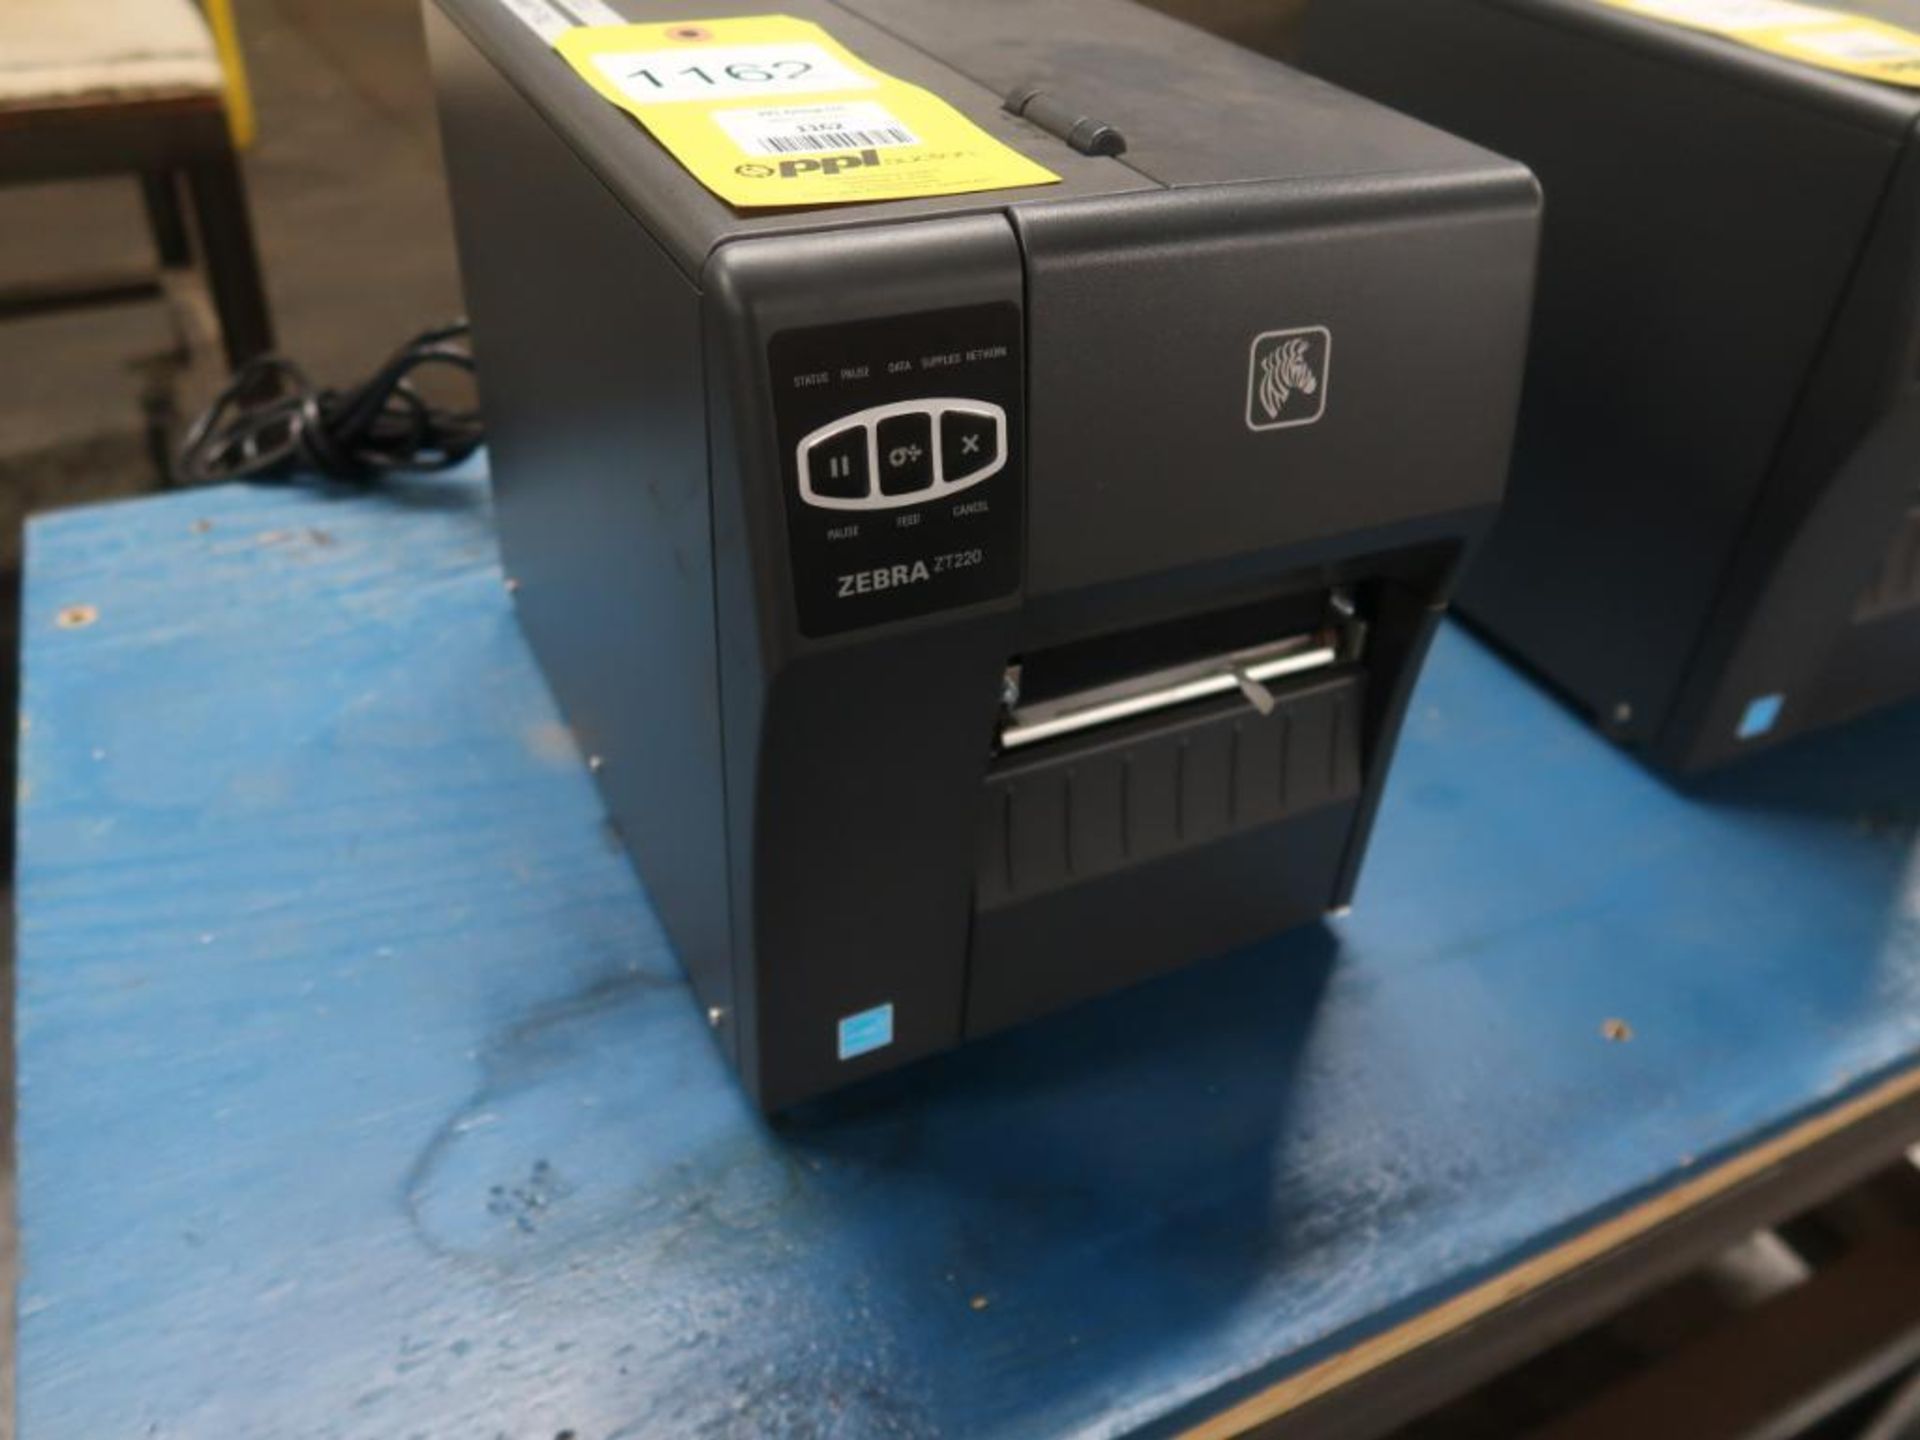 ZEBRA Printer Model ZT220